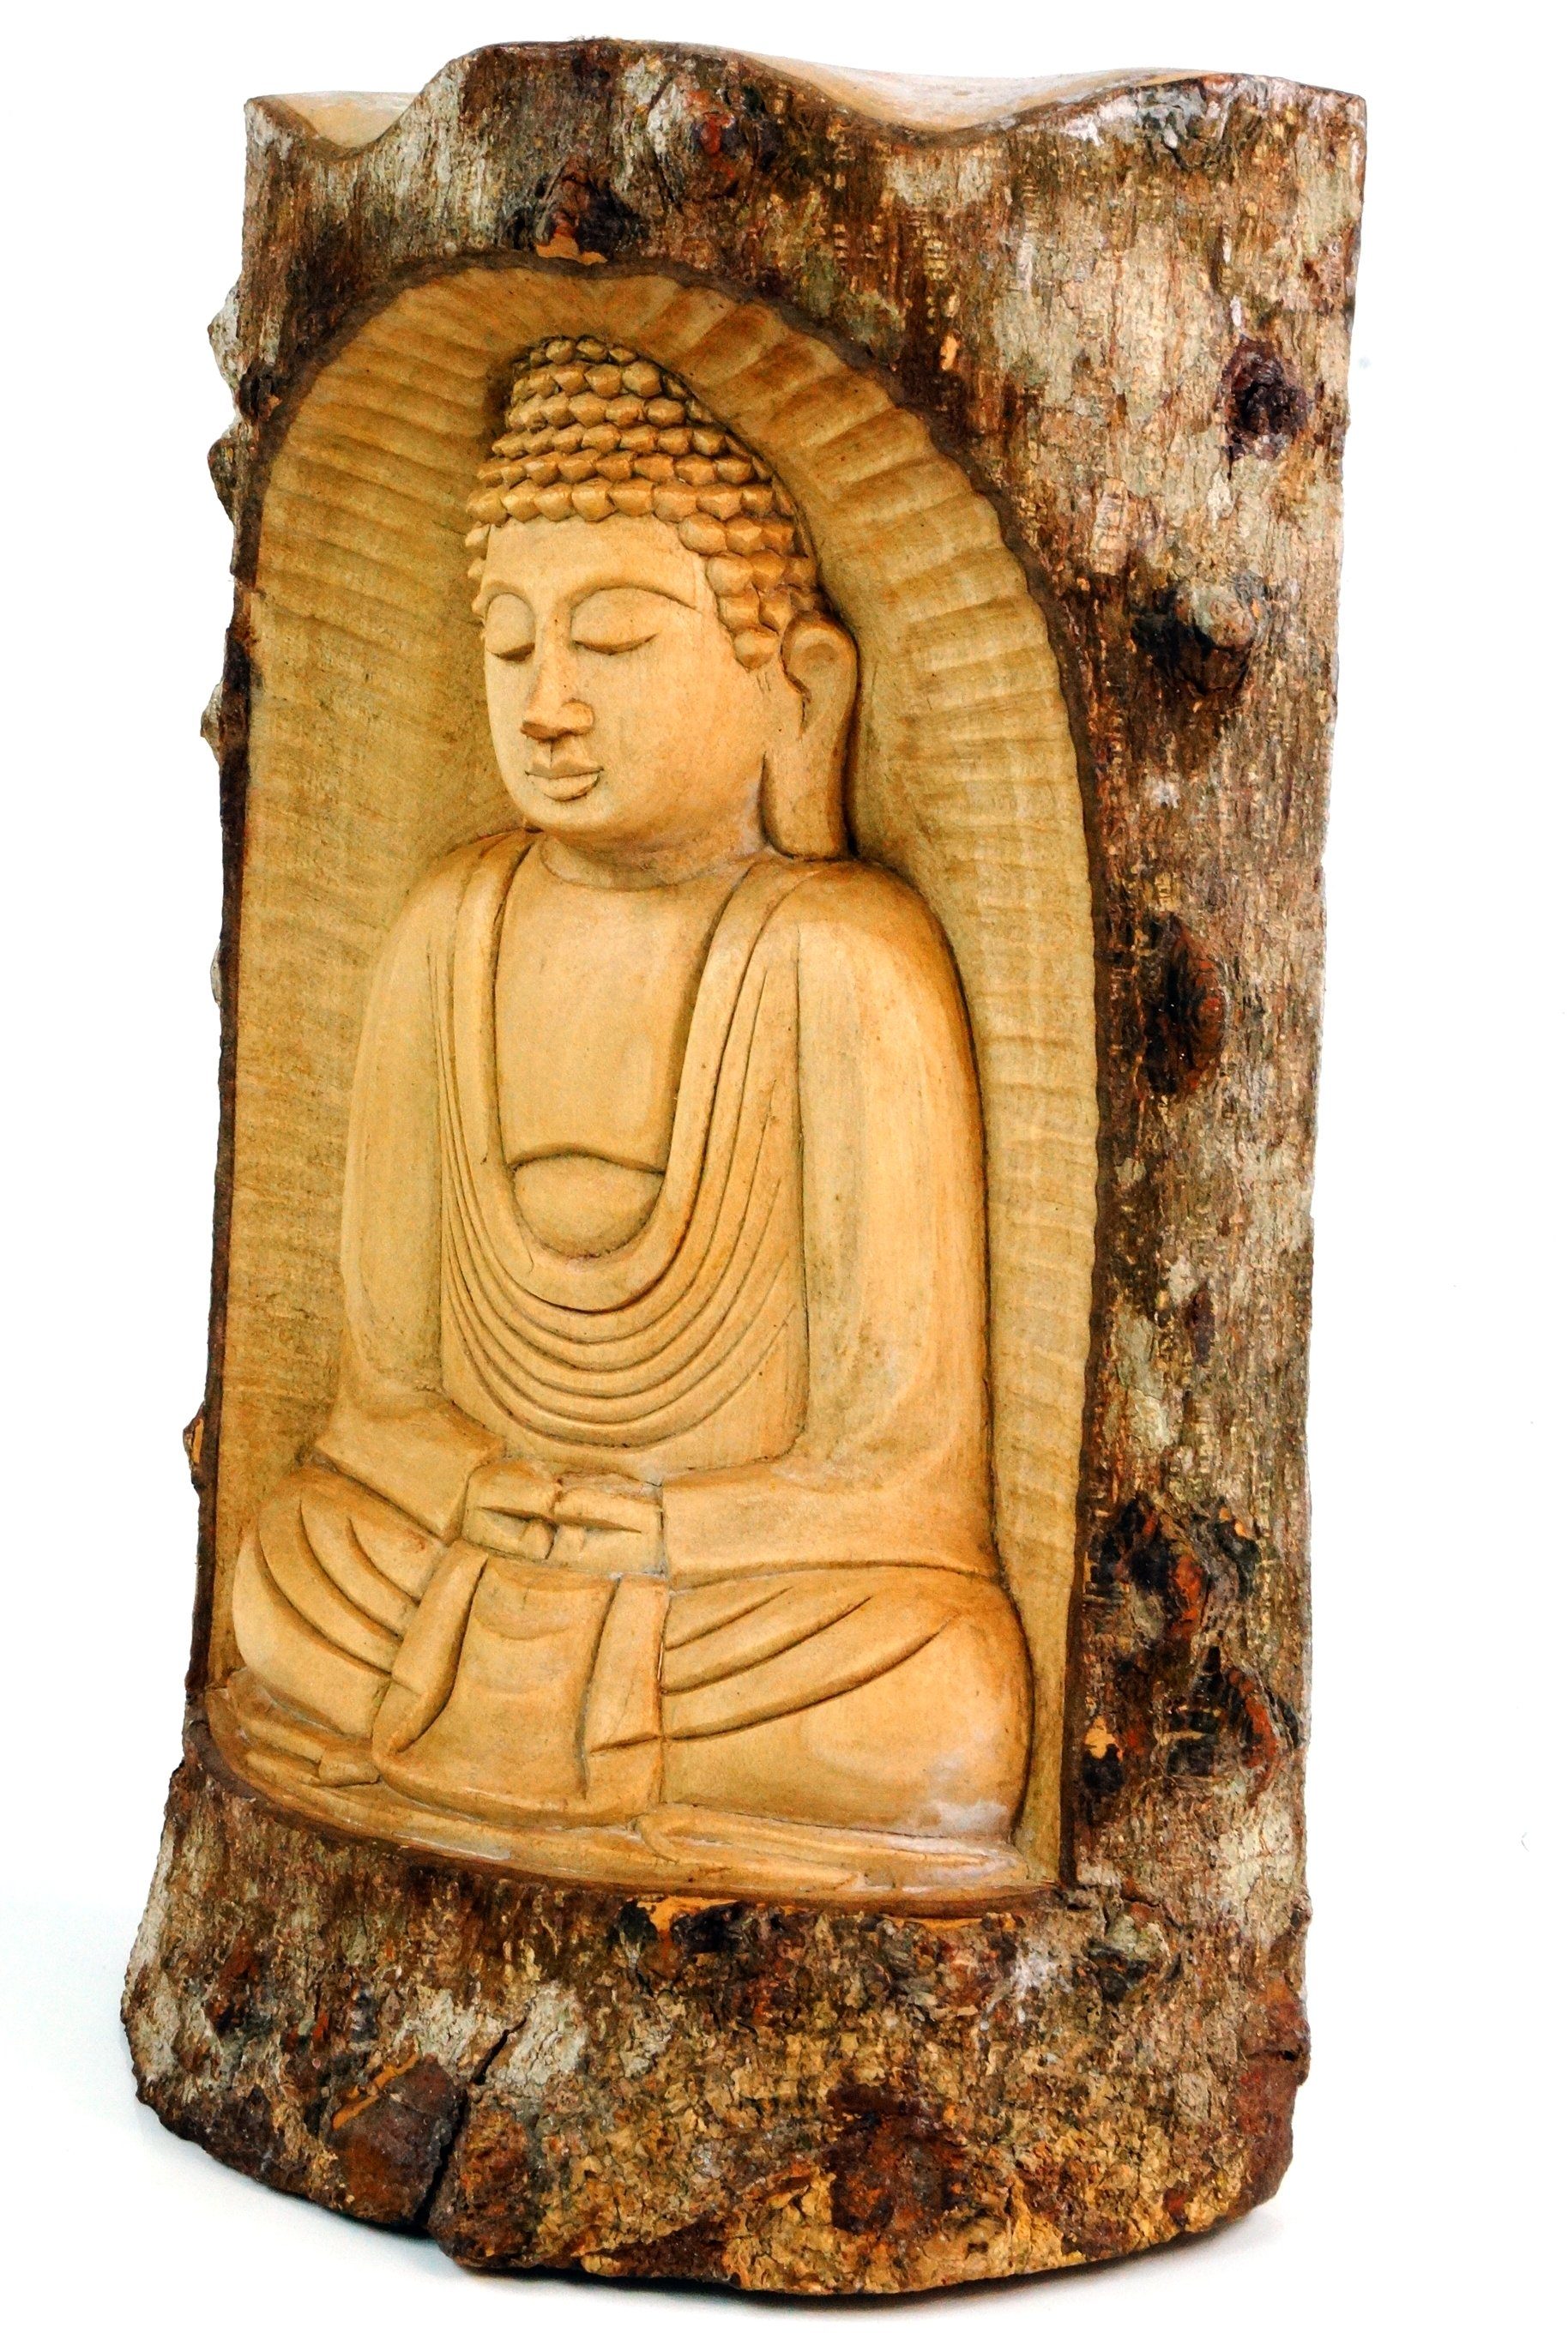 Guru-Shop Buddhafigur Buddhafigur im - 4 Baumstamm Design